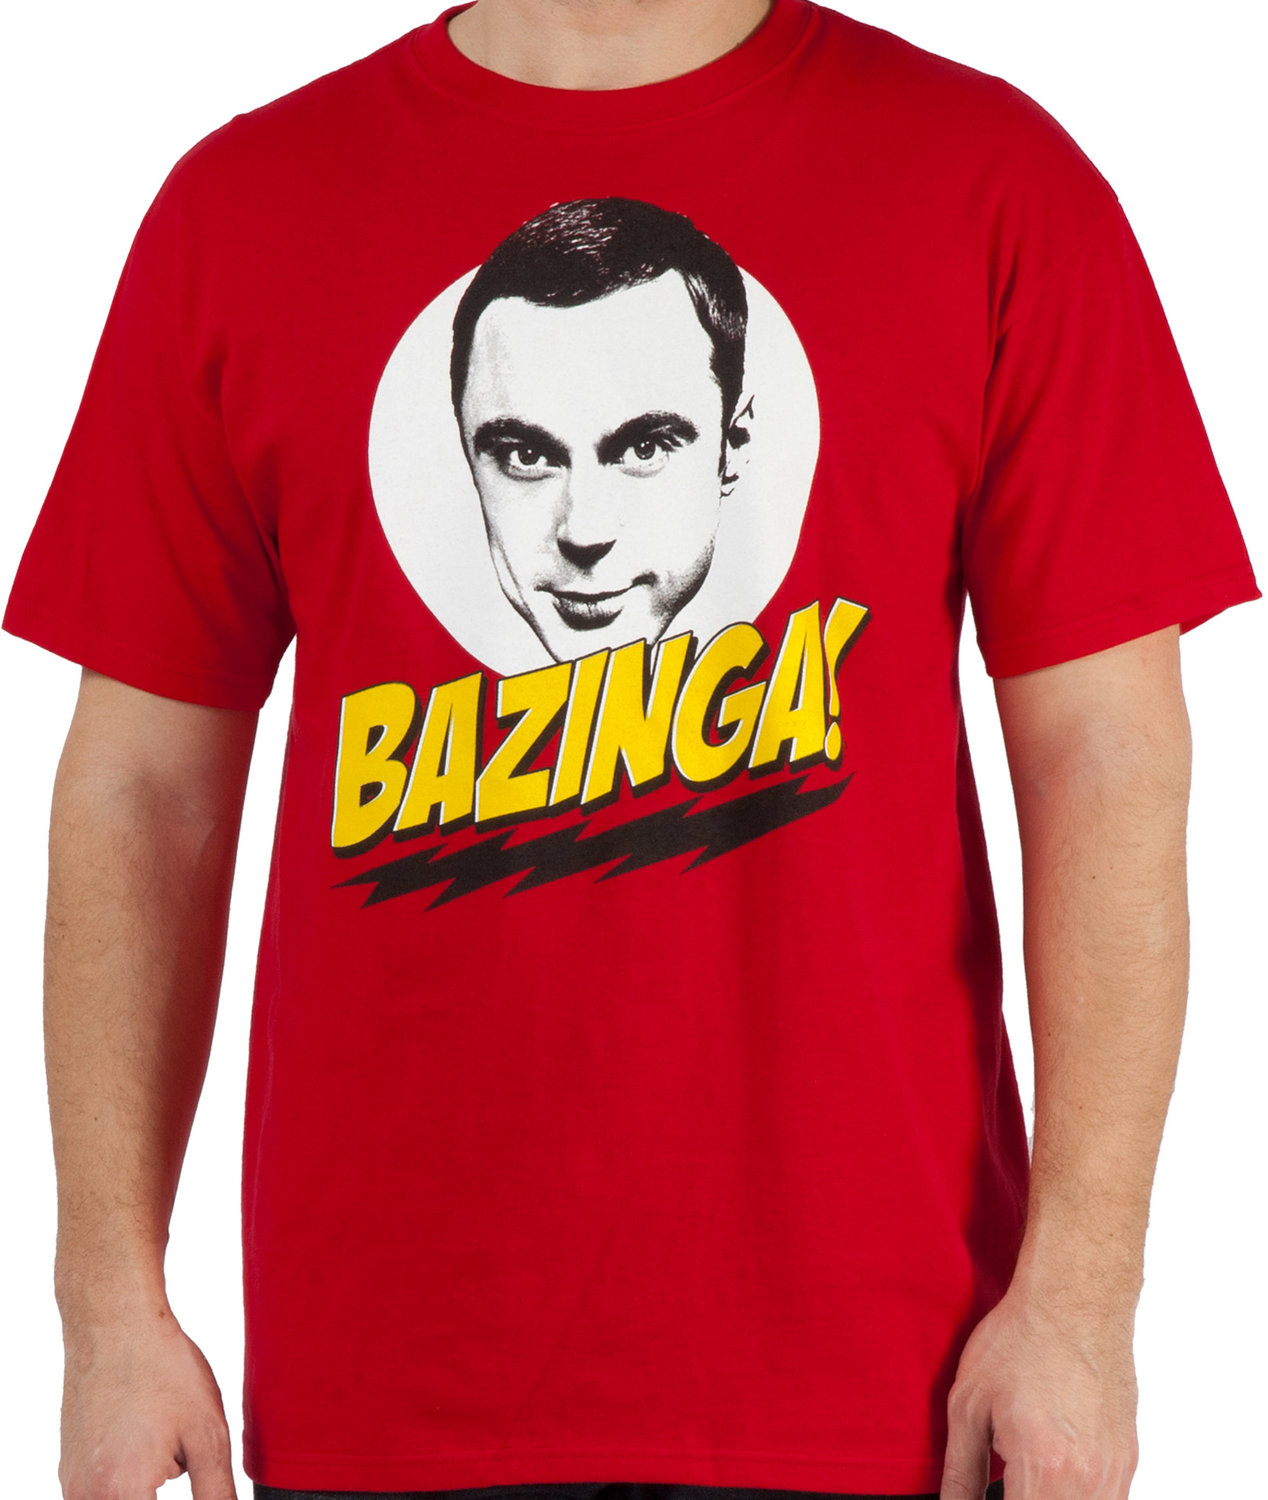 bazinga shirts